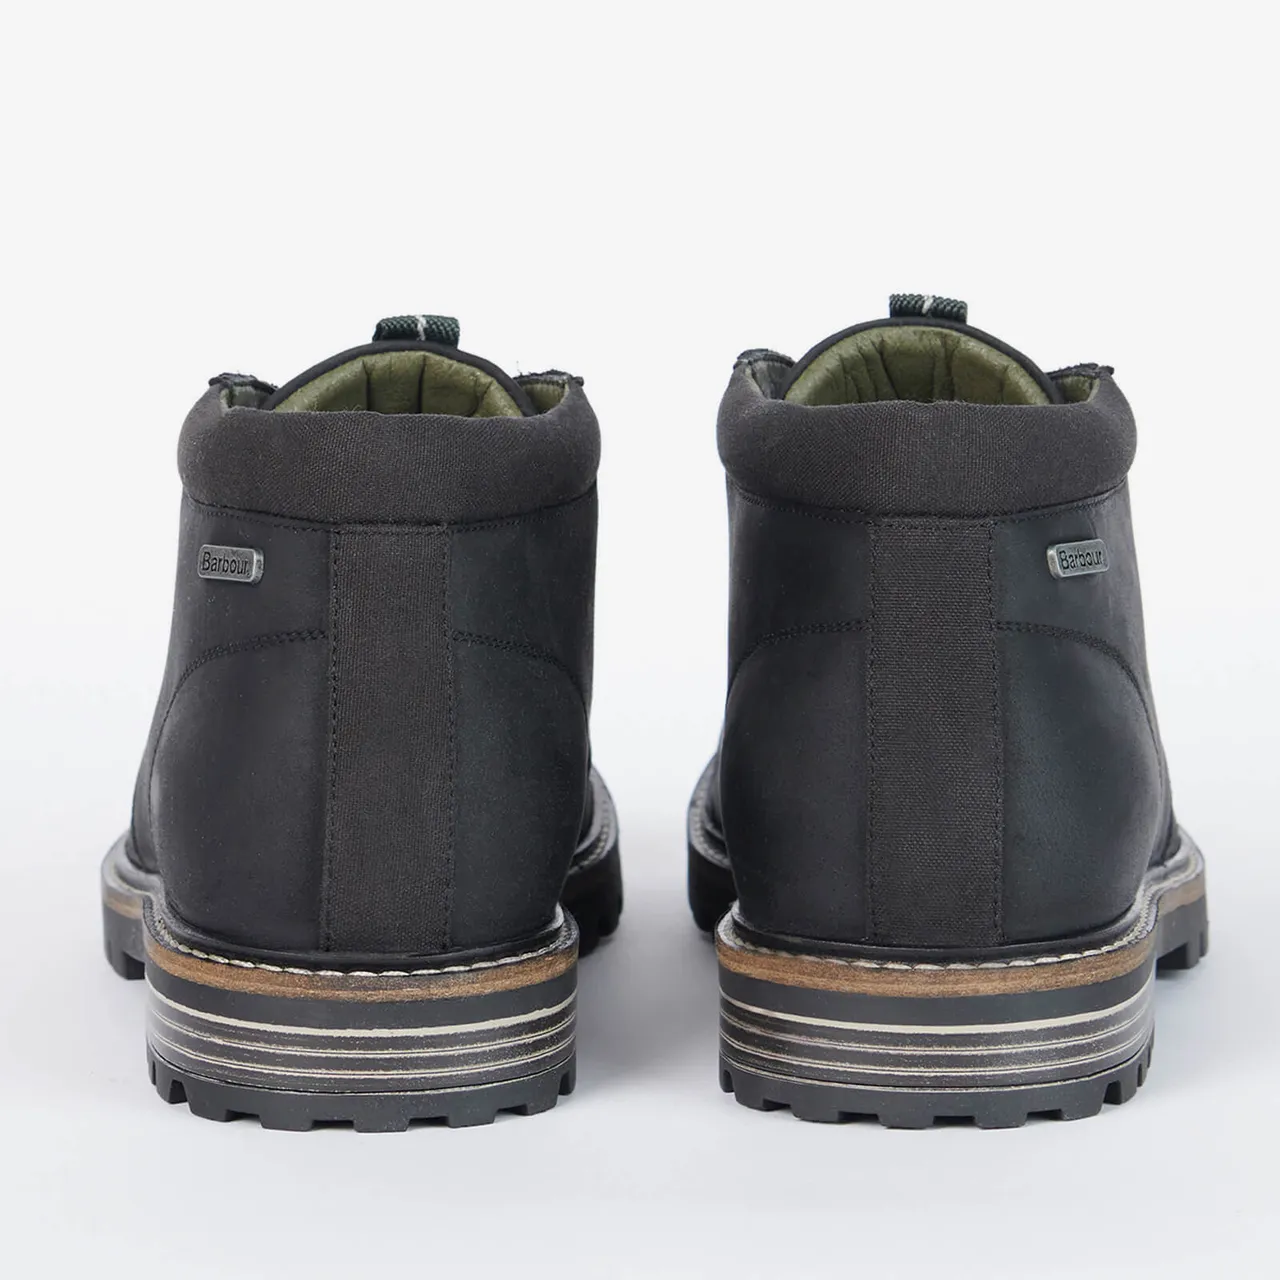 Barbour Men's Boulder Leather Chukka Boots - UK